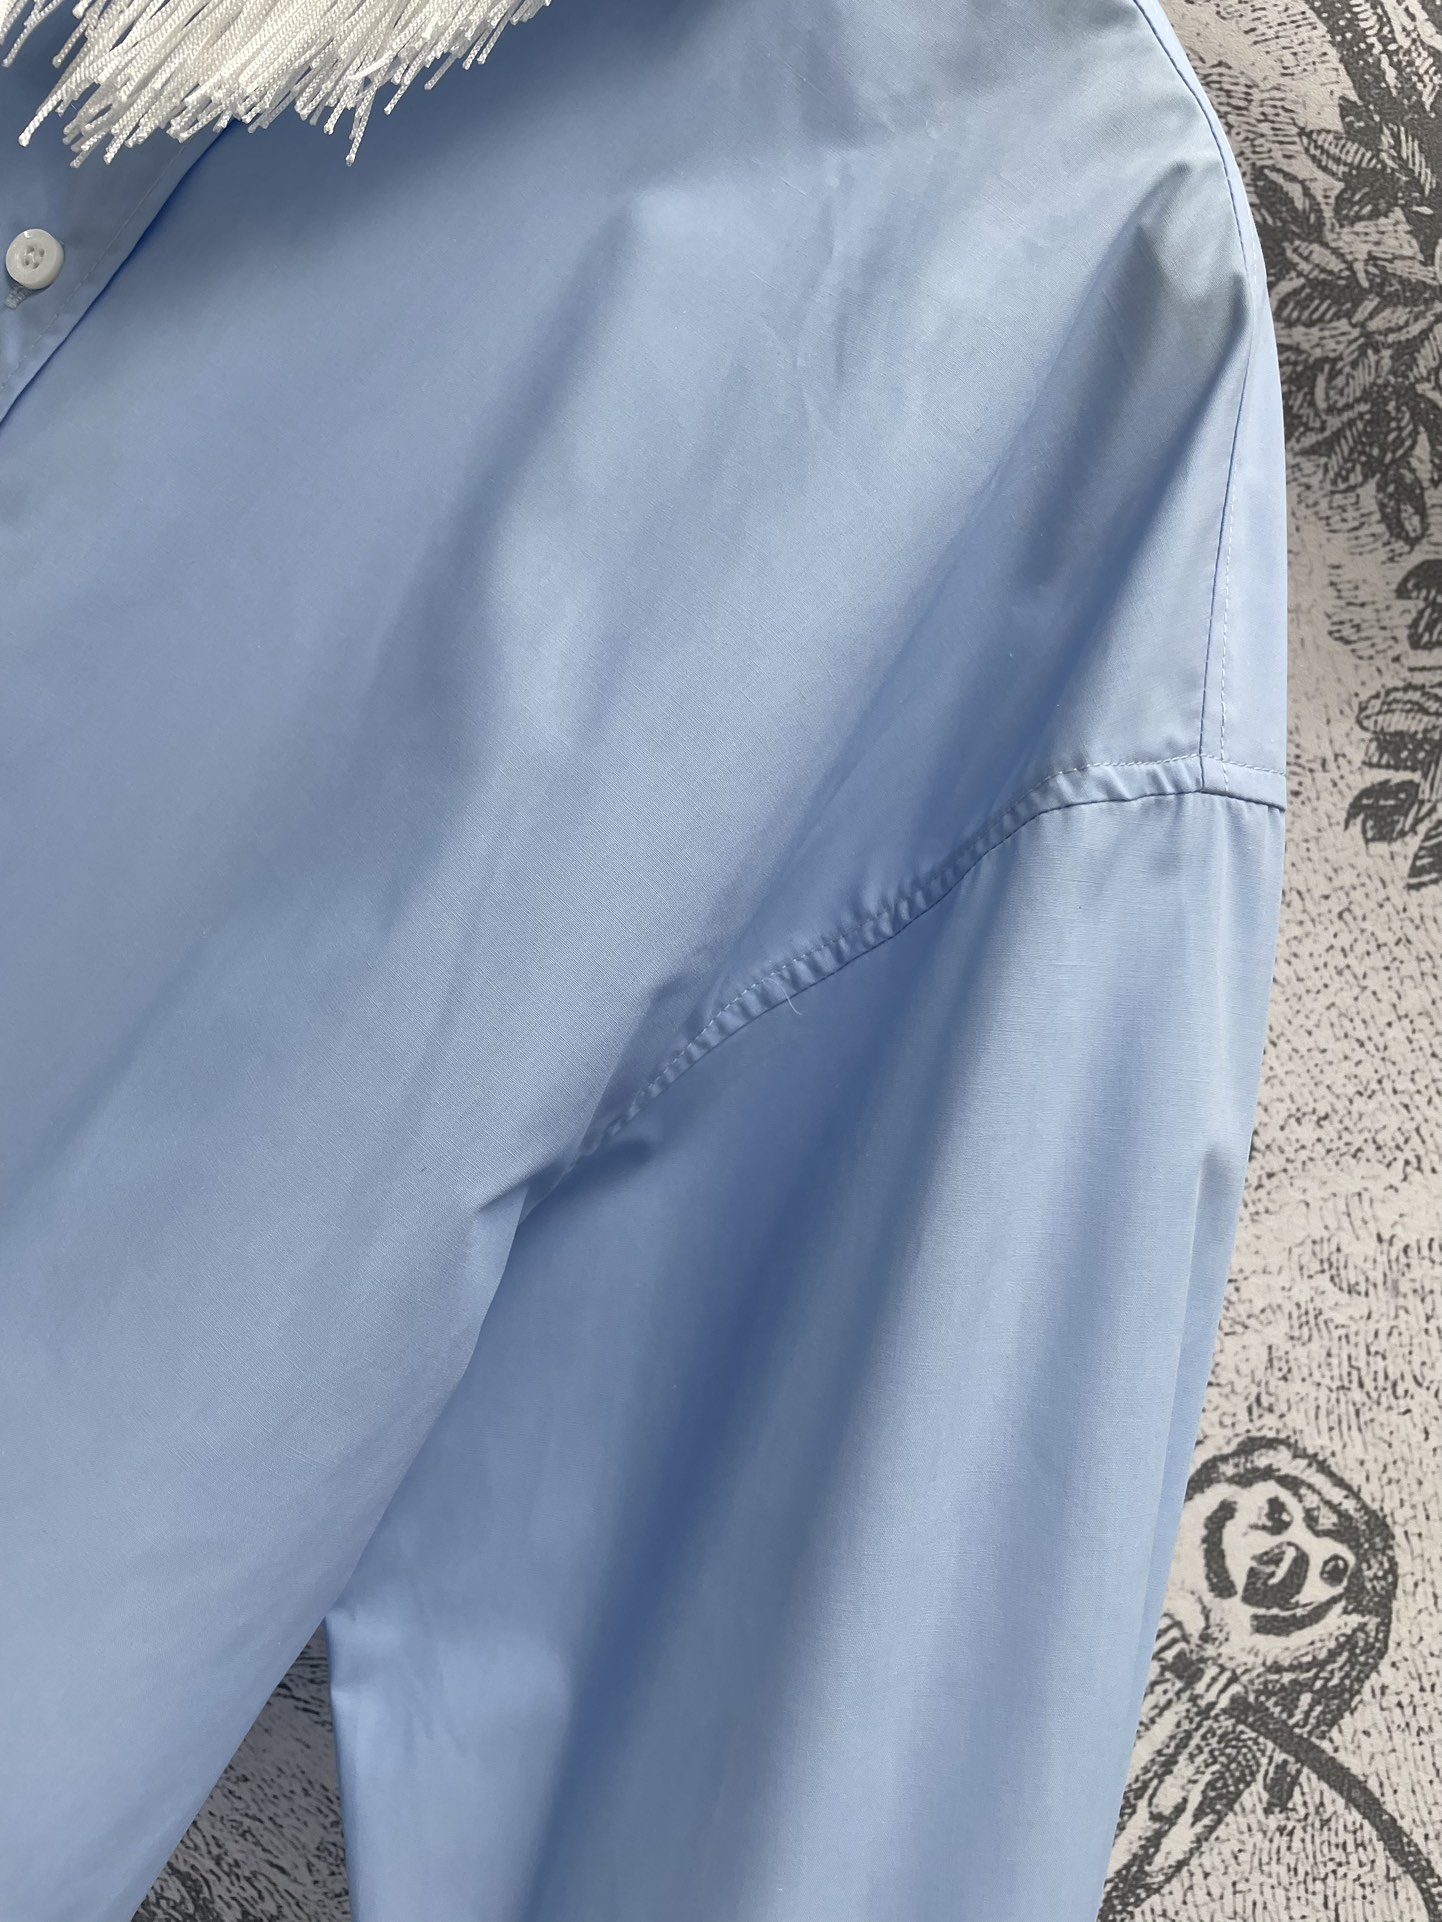 PD24春夏新品撞色流苏领系列流苏领衬衫式连衣裙+流苏领衬衫将优雅与时尚完美融合基础衬衫式版型腰间配有本